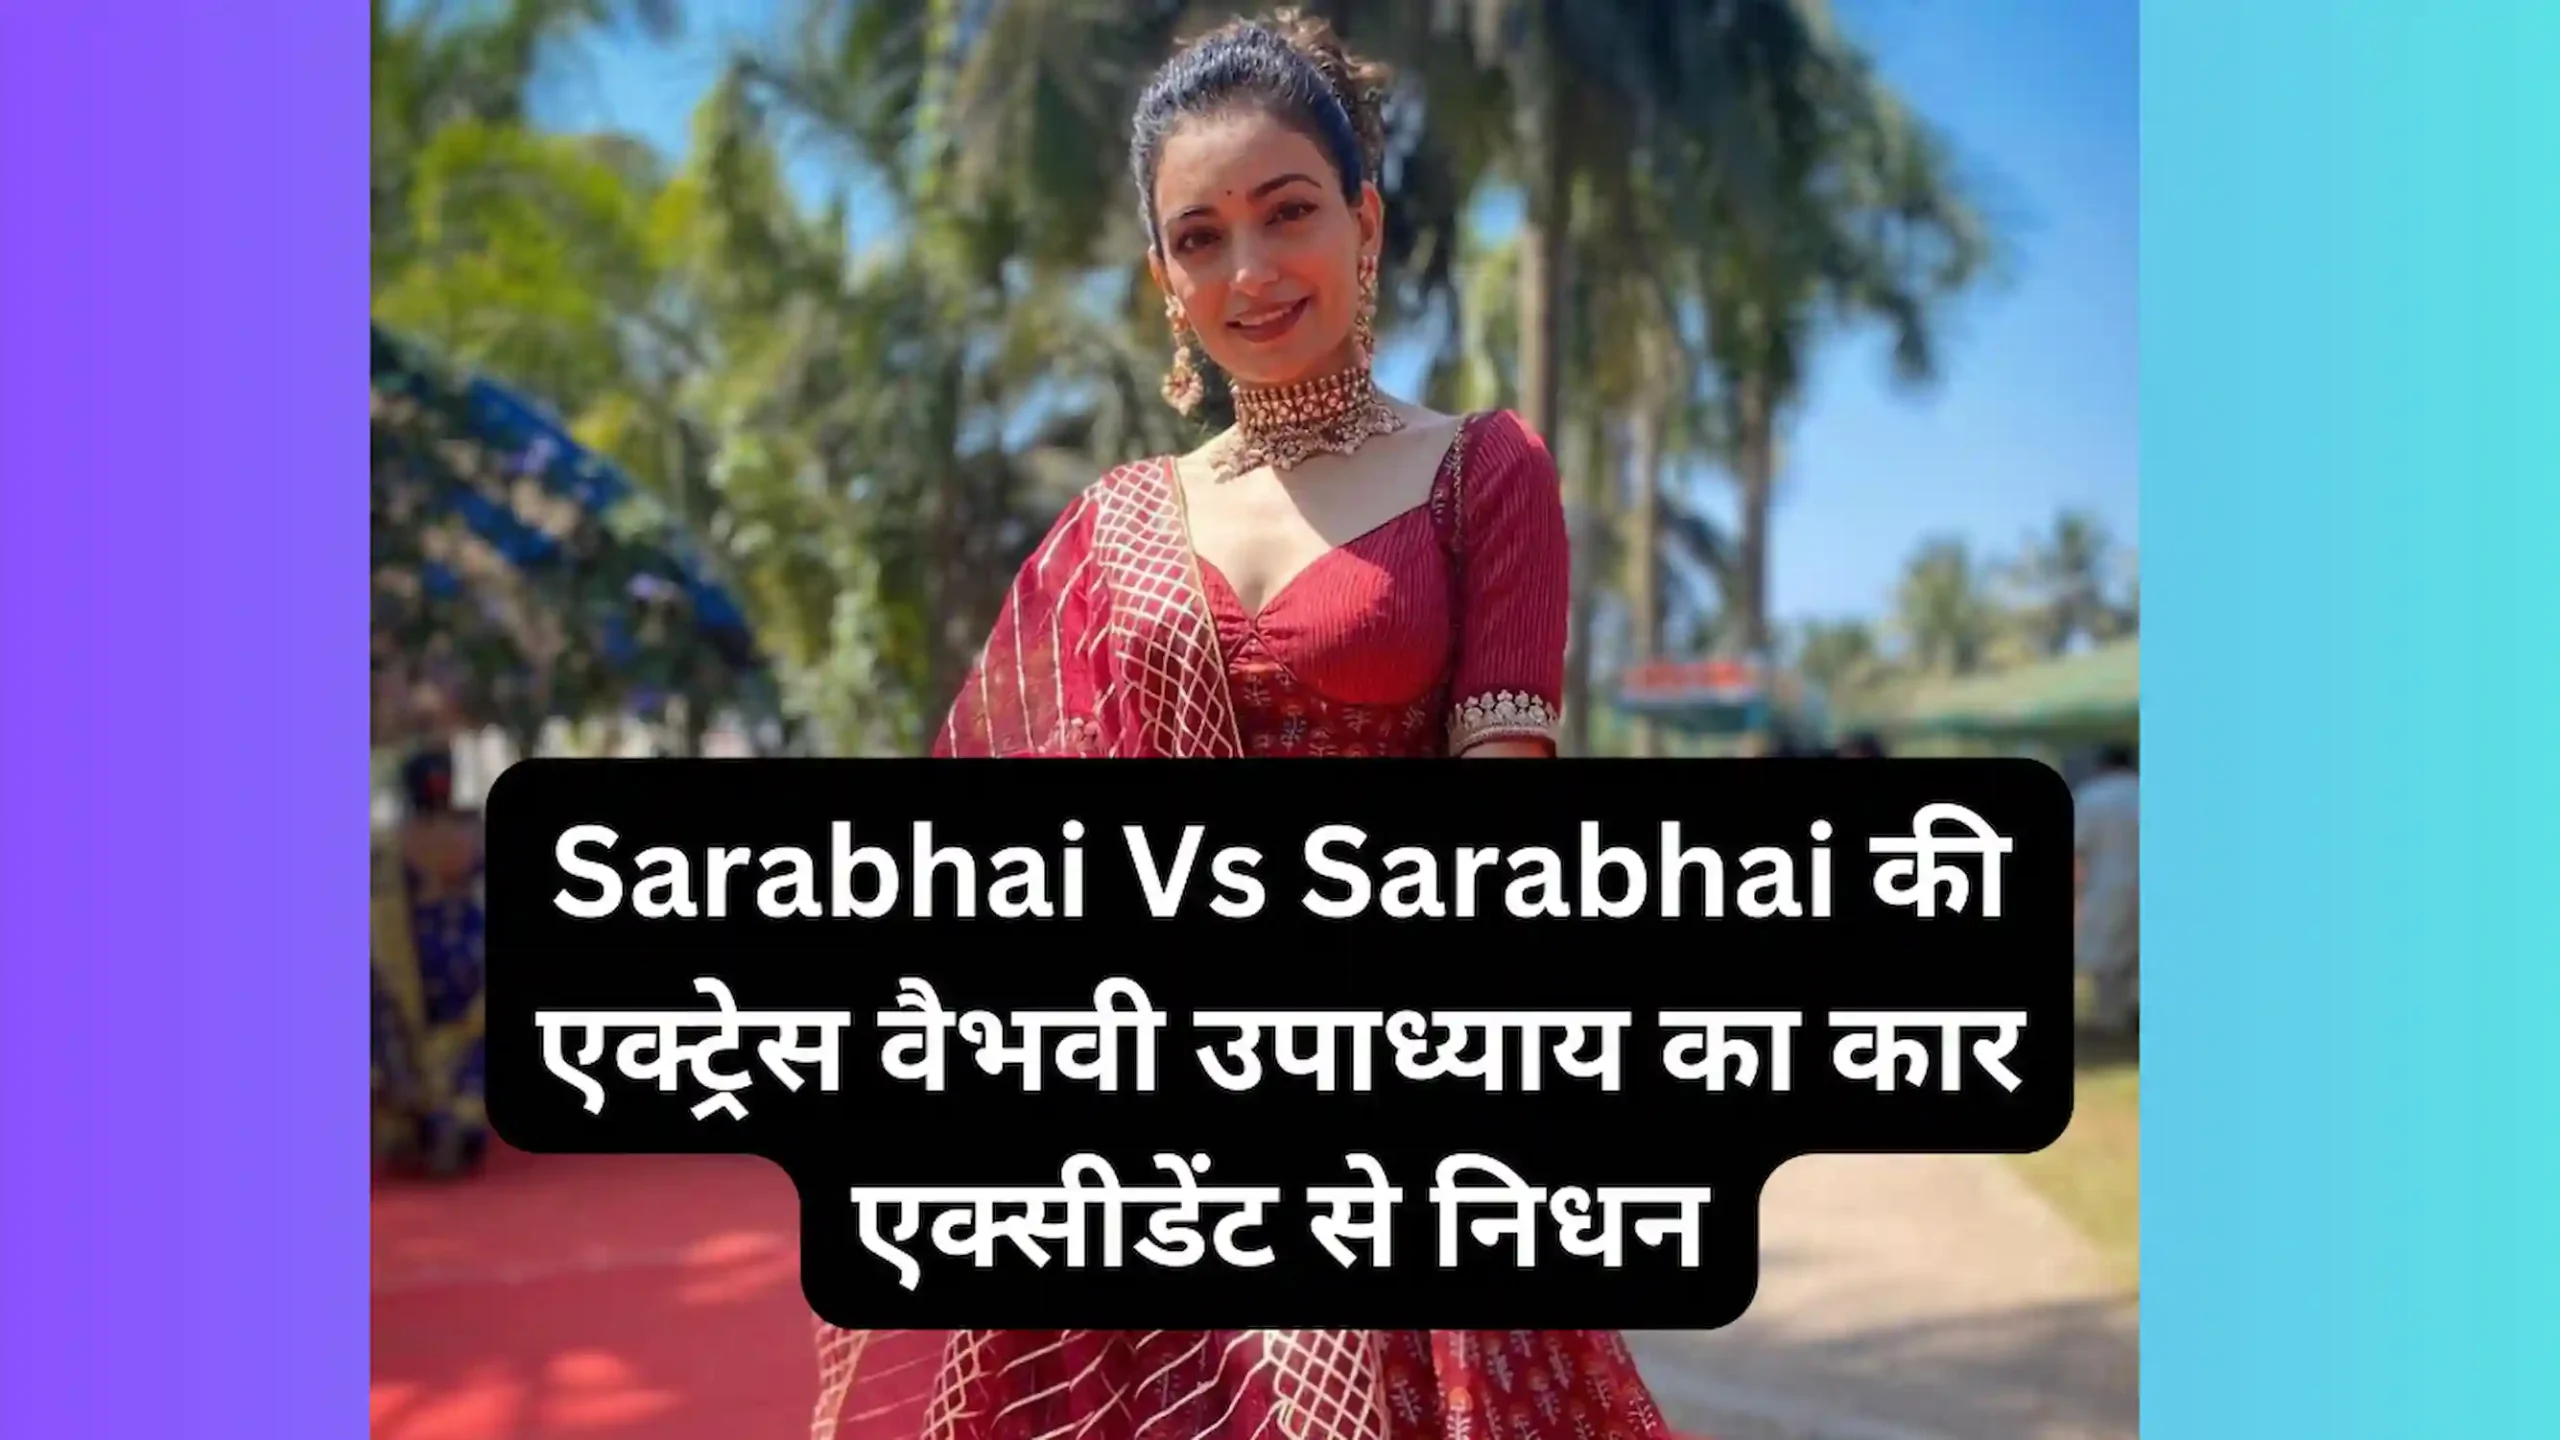 Sarabhai Vs Sarabhai actress Vaibhavi Upadhyay died in the car accident